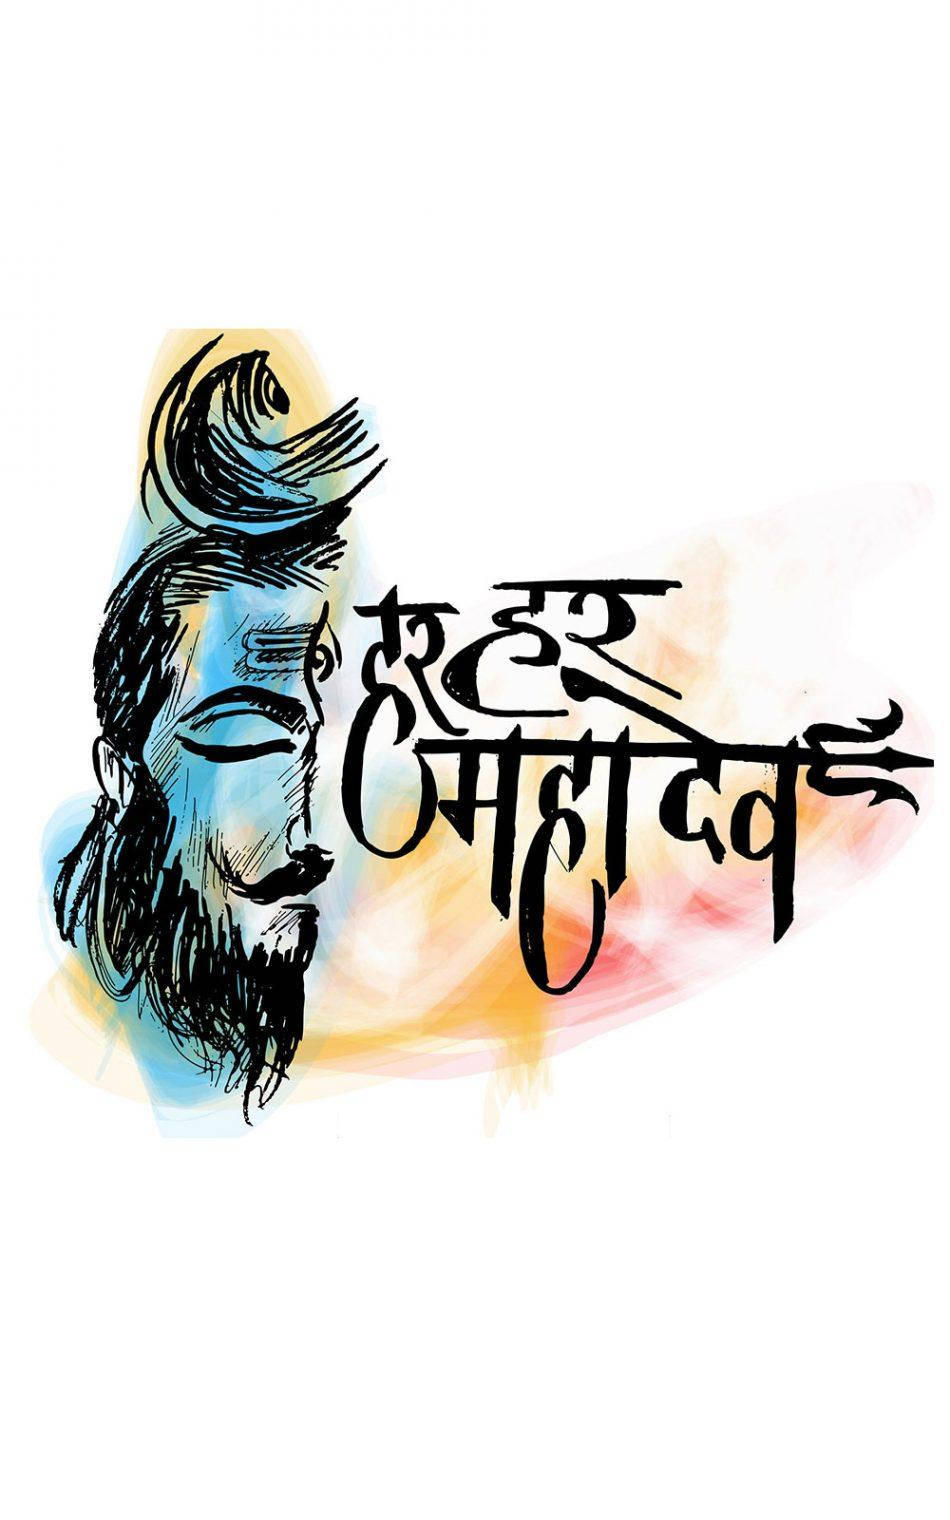 Download Lord Shiva Mobile Wallpaper Wallpaper